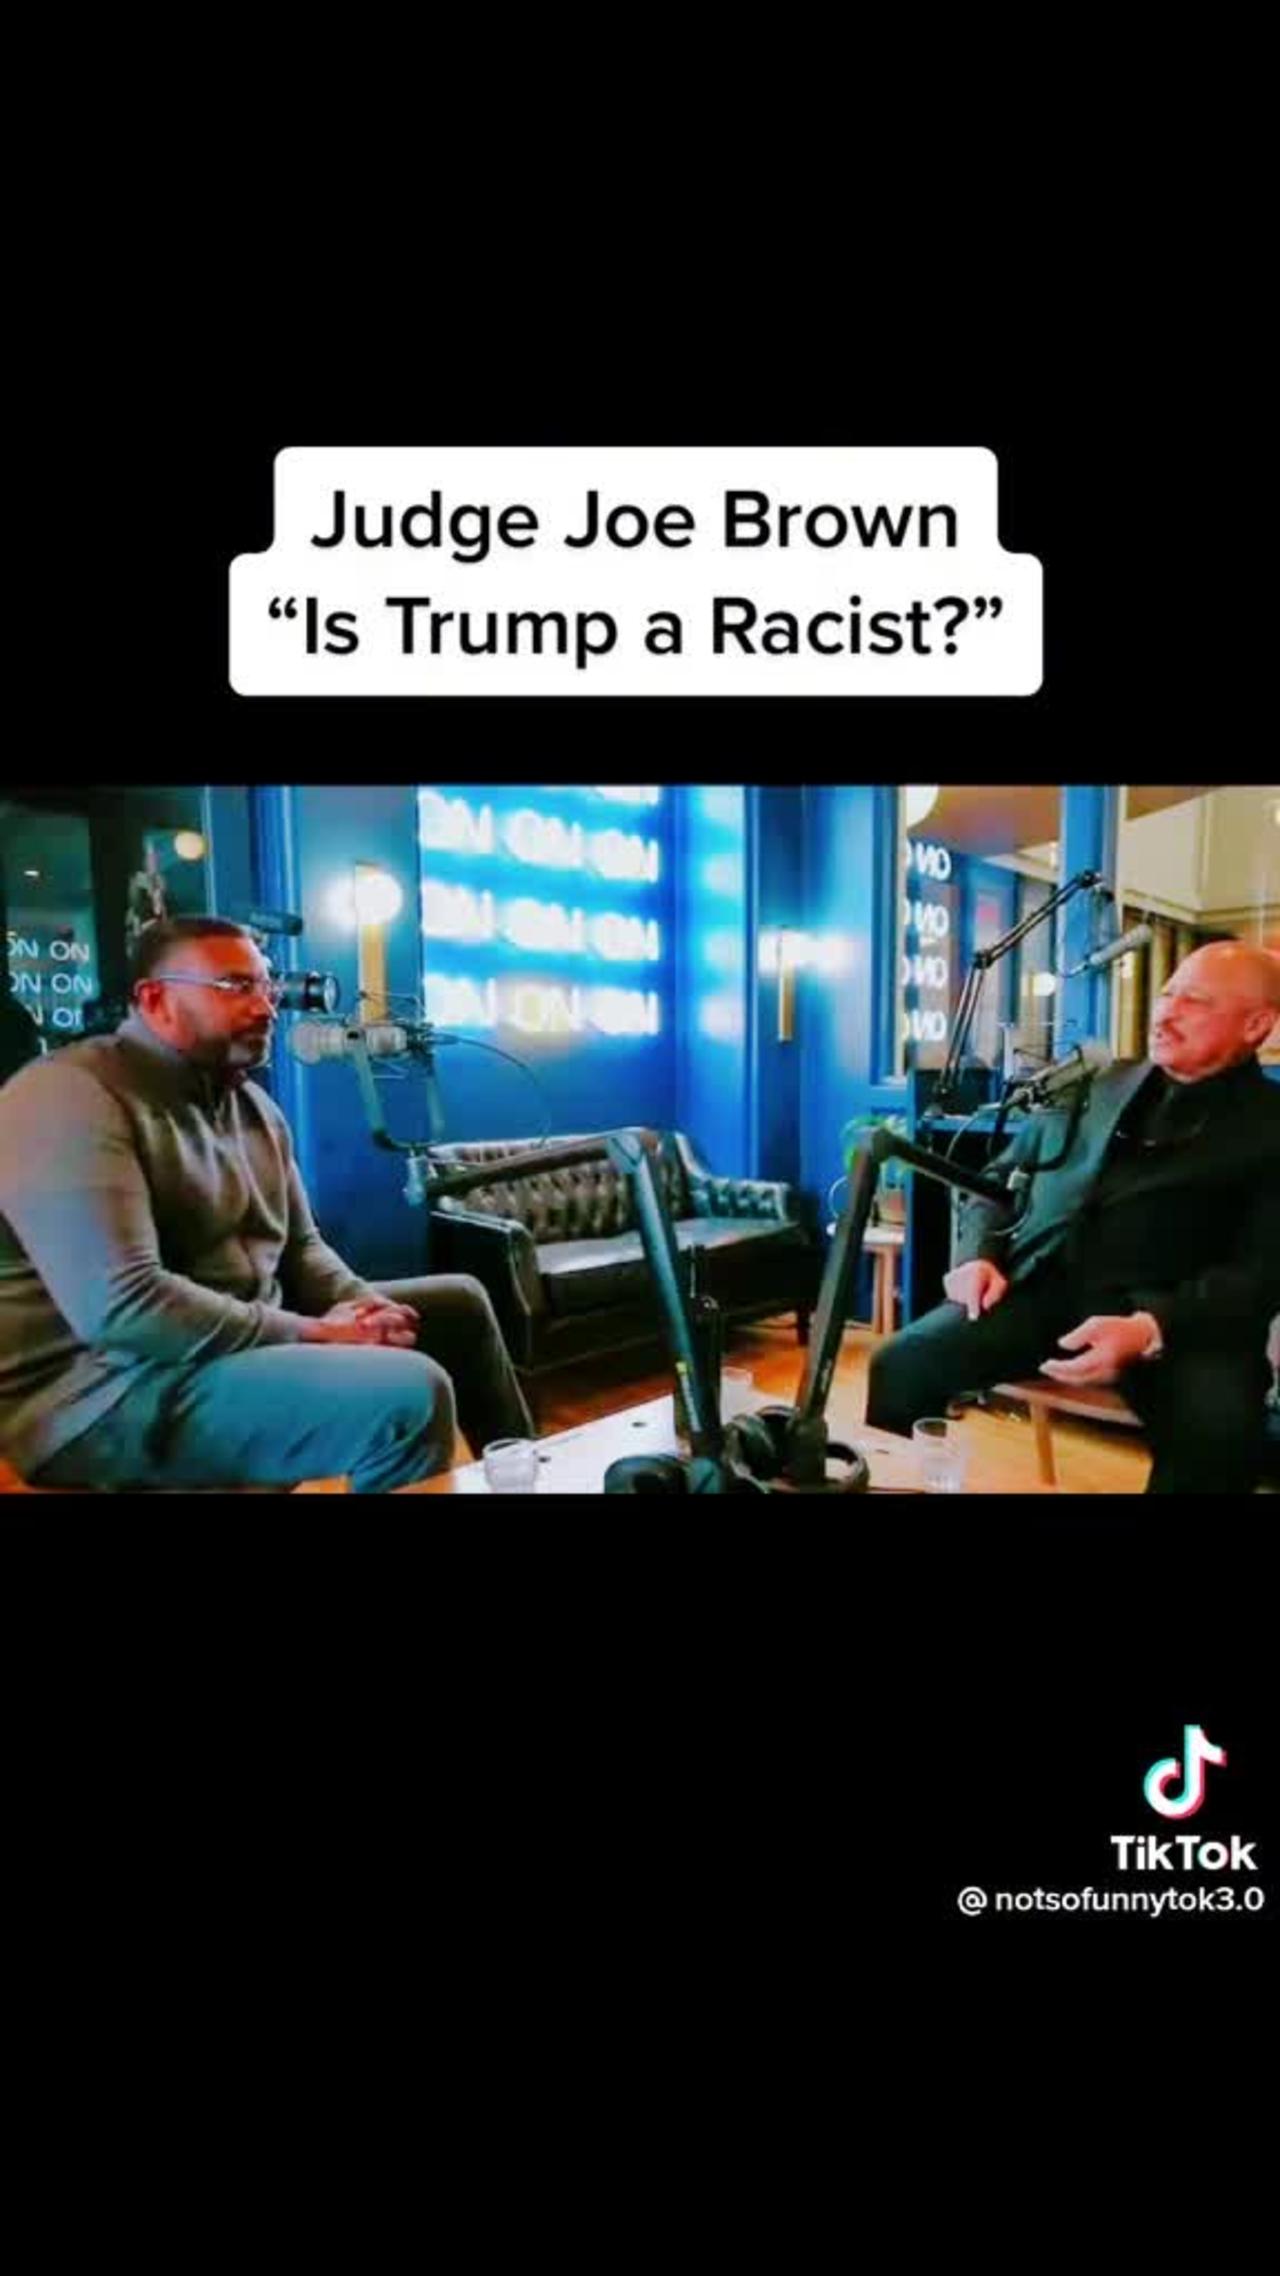 Trump Is Not a Racist! That's Jim Crow "Joe"